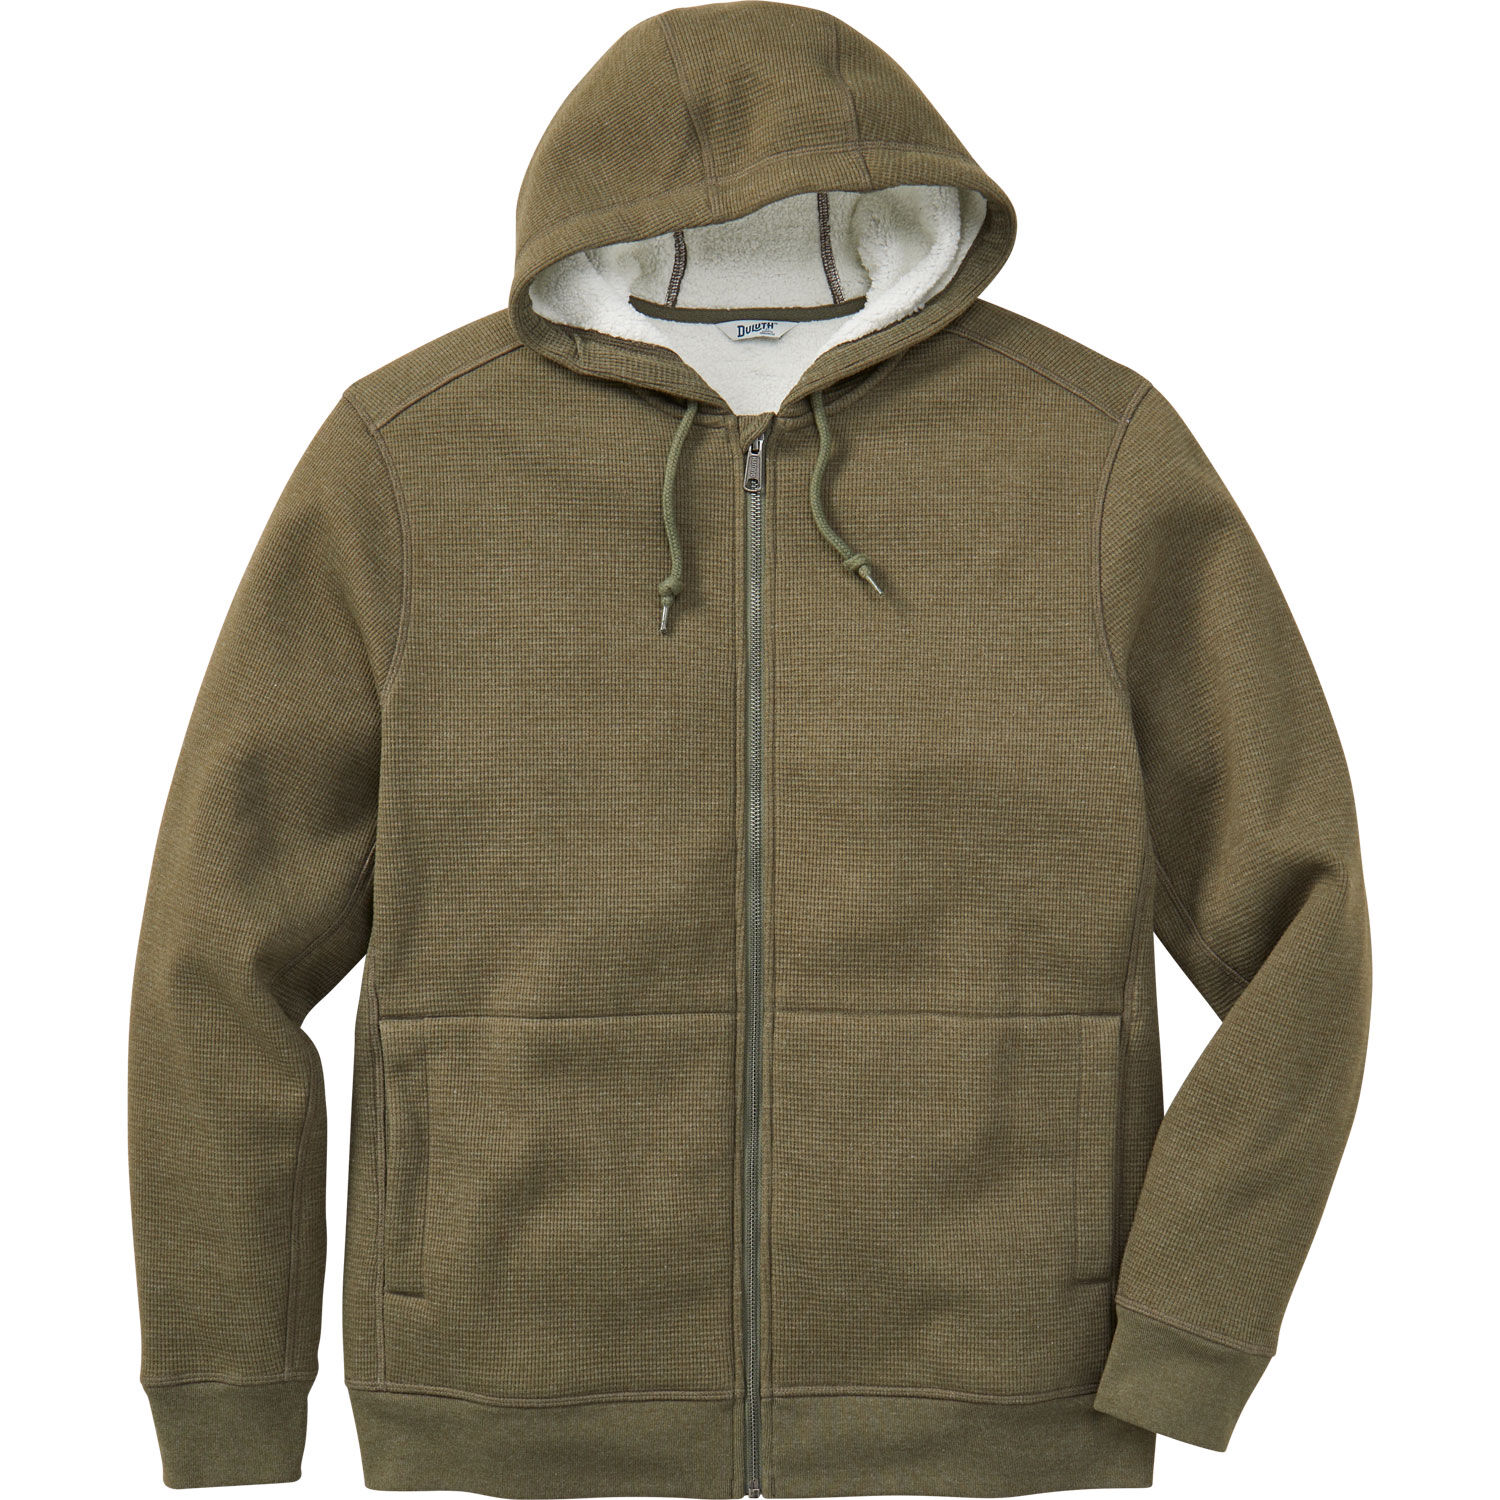 Men's Sweatshirts, Hoodies & Fleece Jackets | Duluth Trading Company